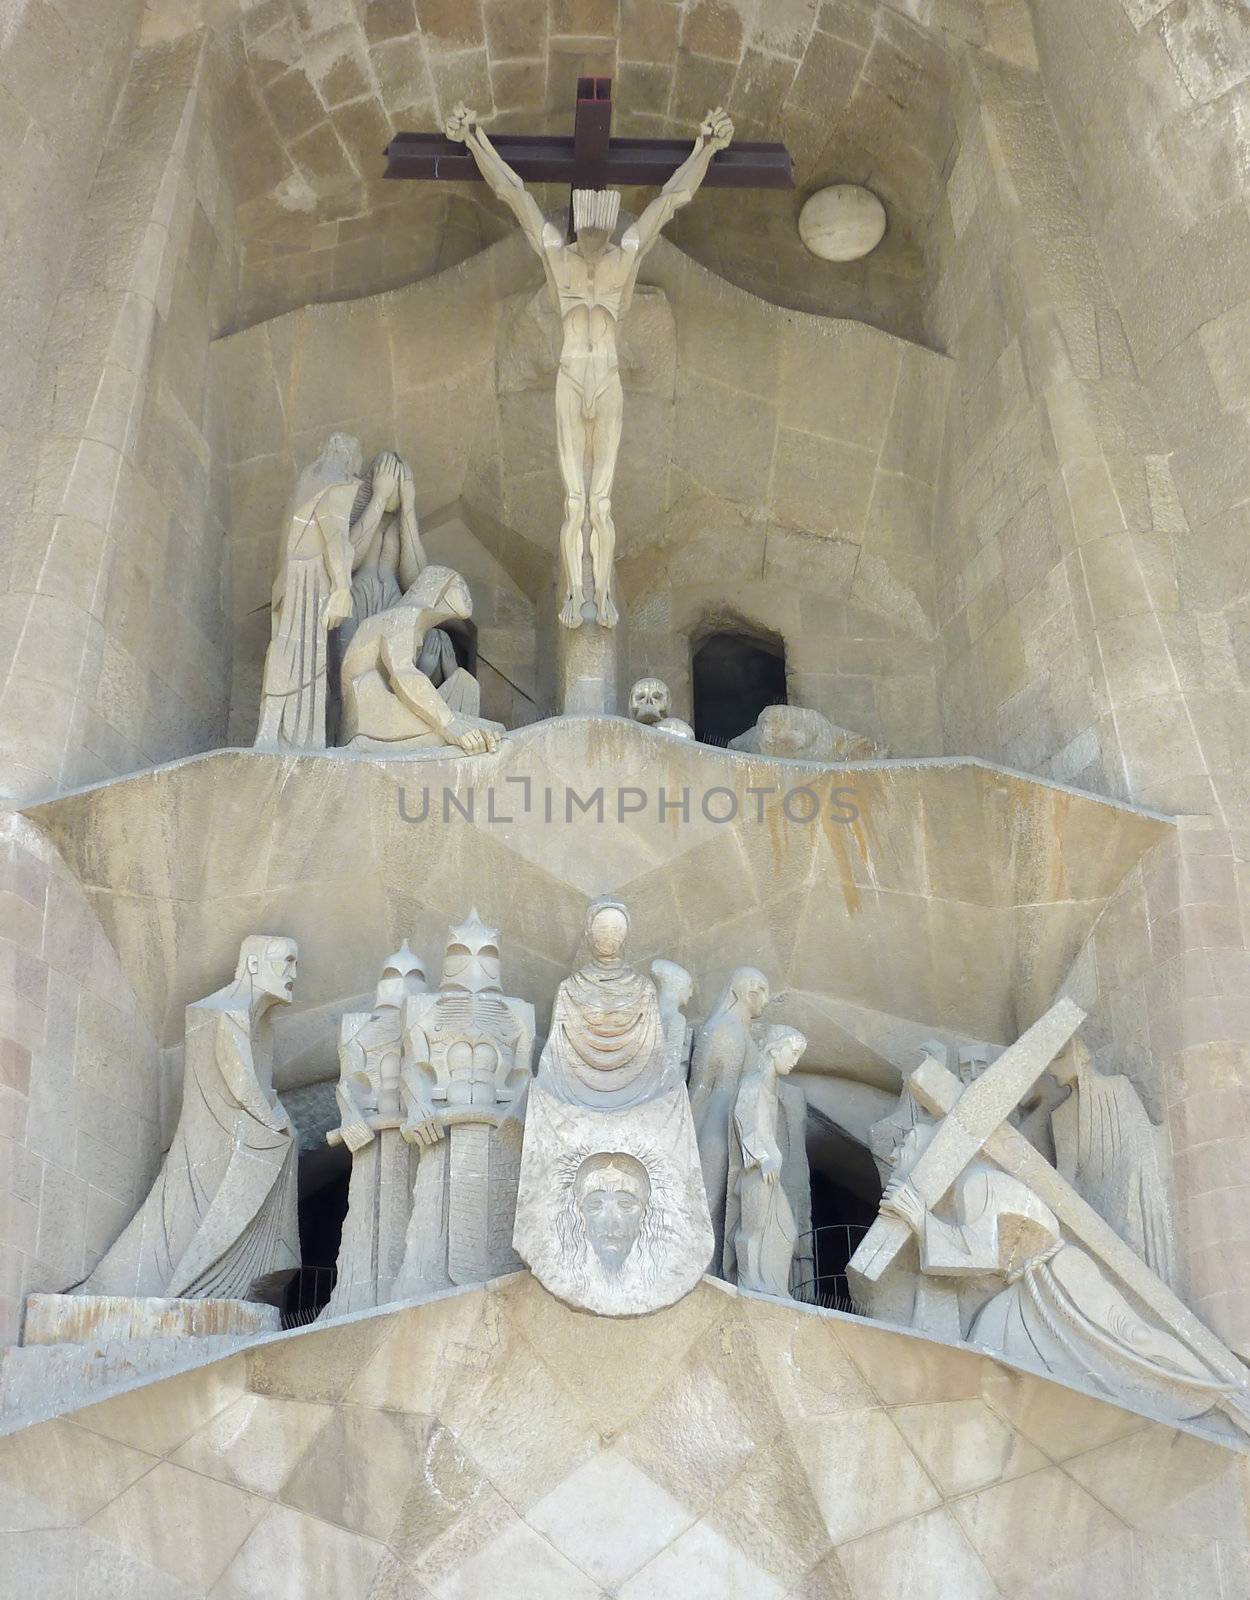 Statues at the entrance of the Sagrada familia, Barcelona, Spain by Elenaphotos21